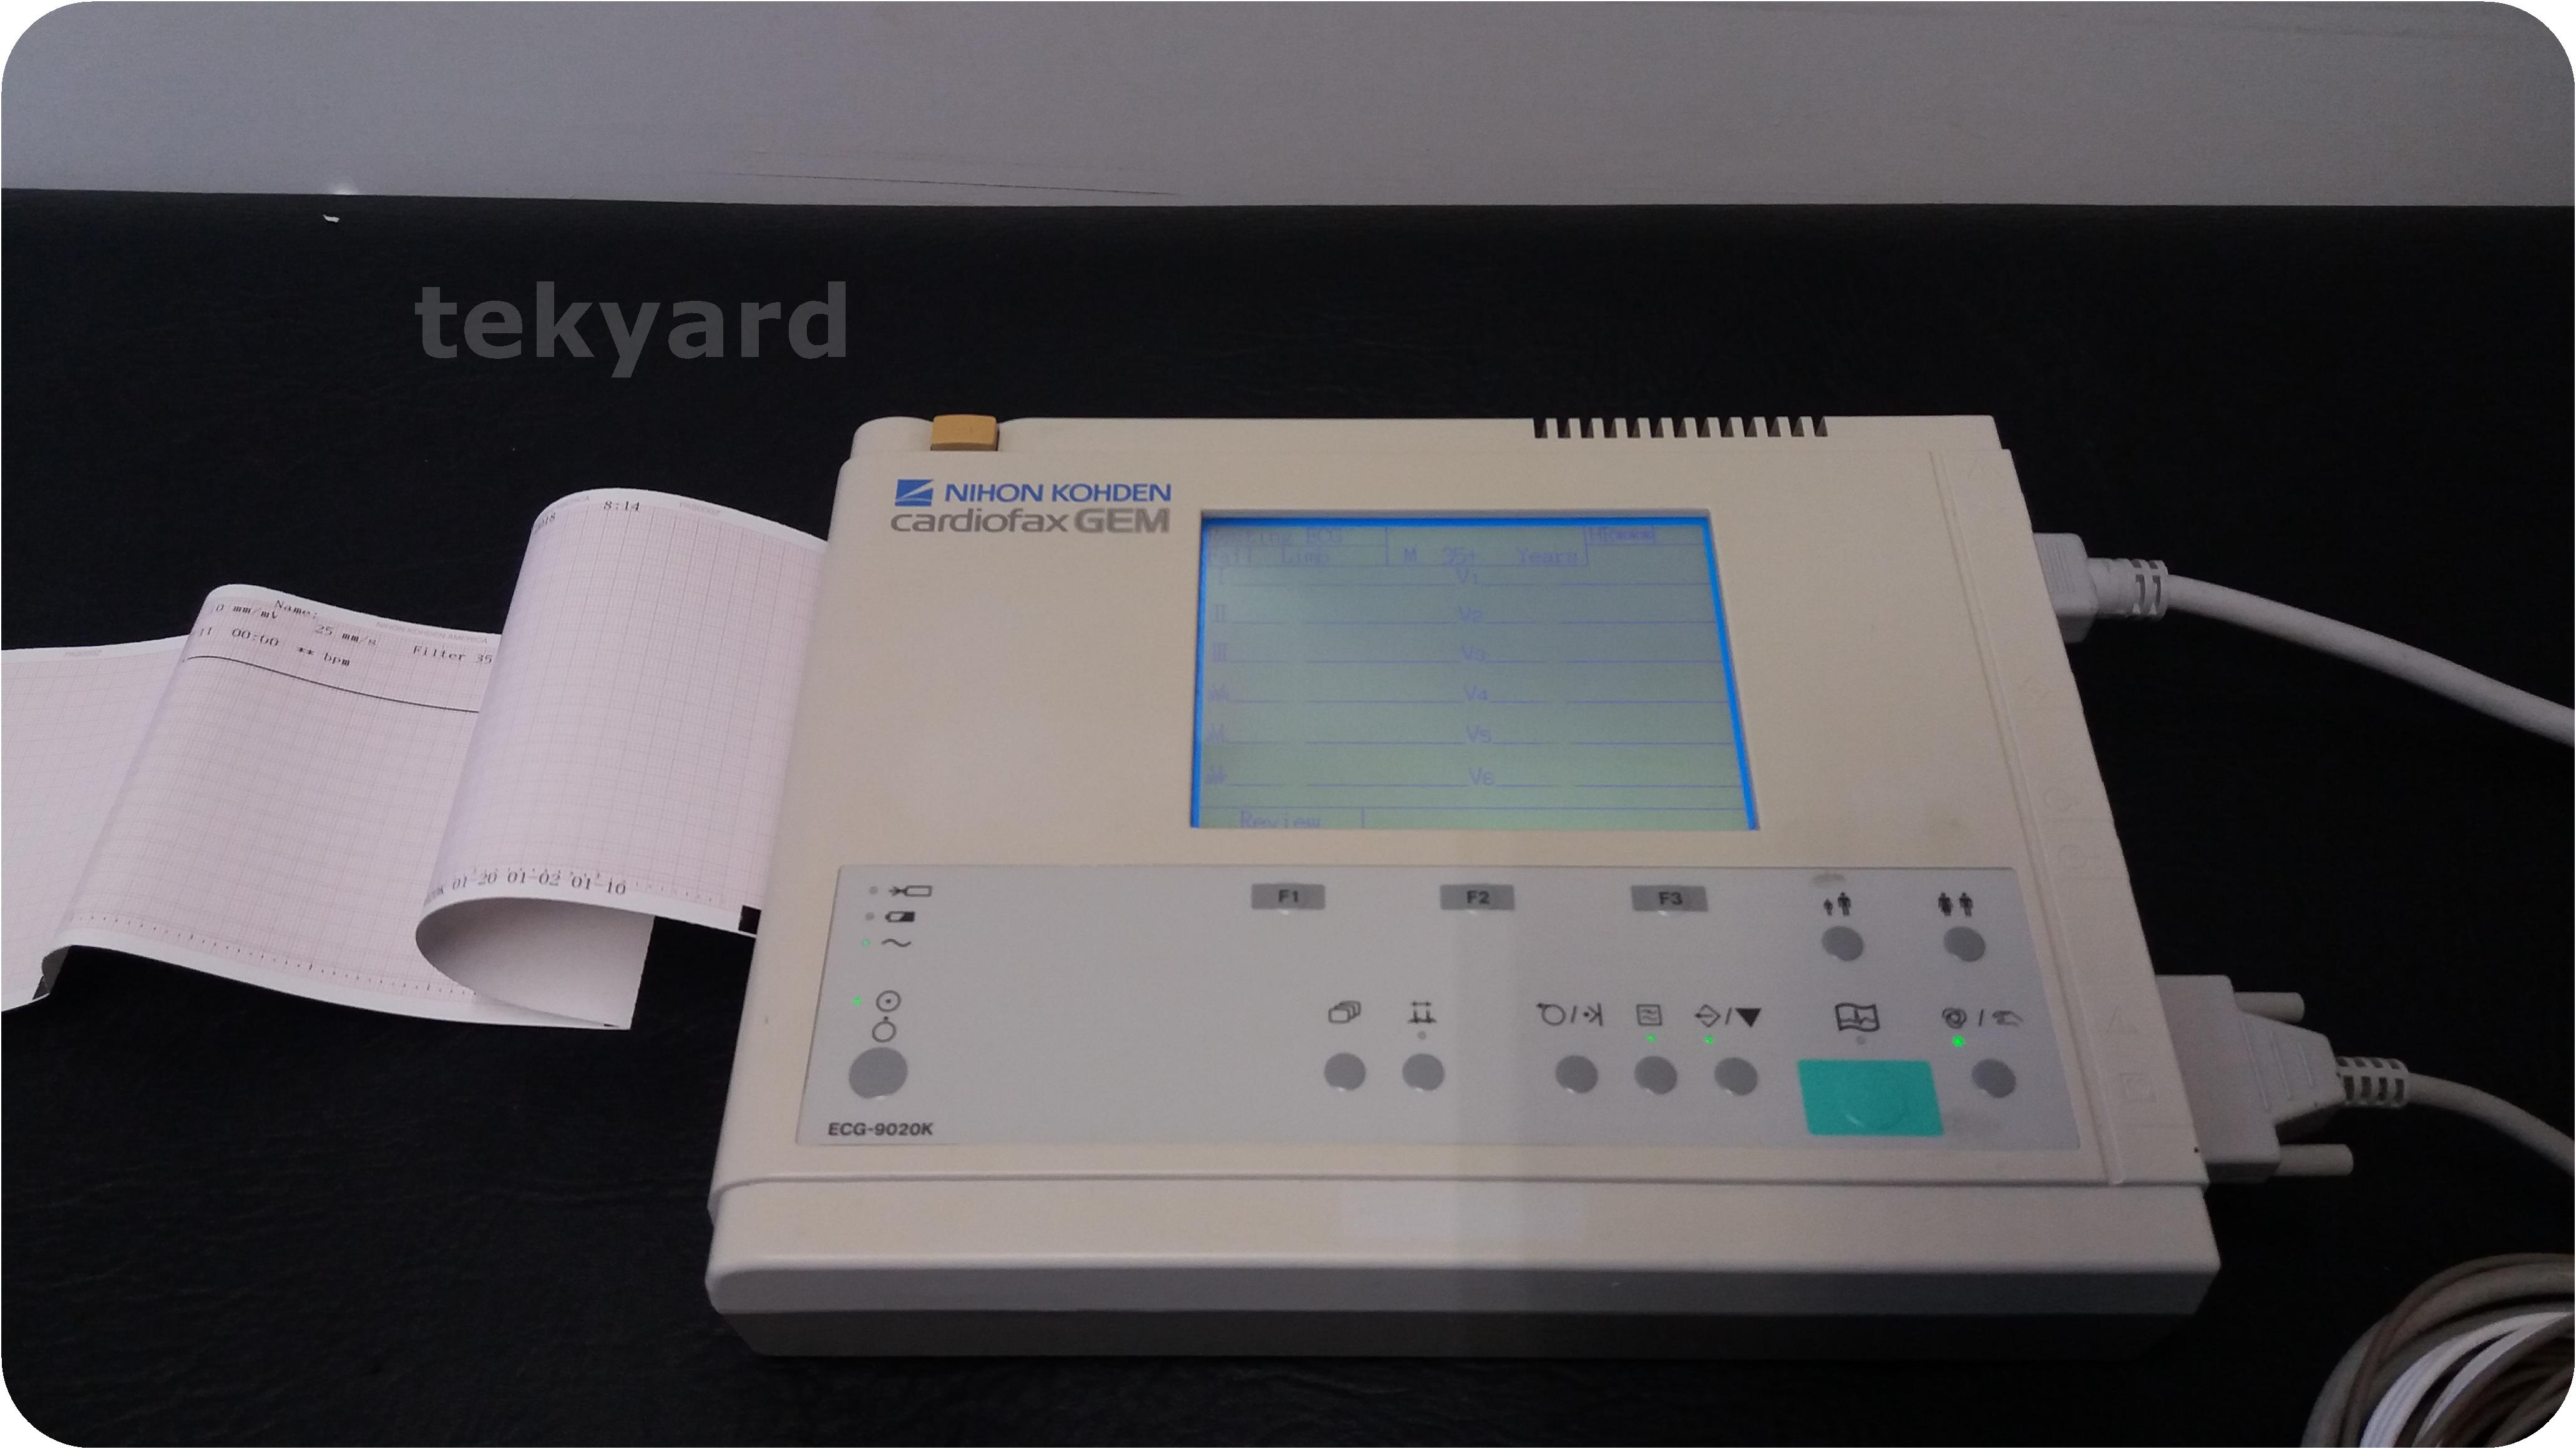 tekyard, LLC. - 209592-Nihon Kohden ECG-9020K CardioFax GEM ECG Machine